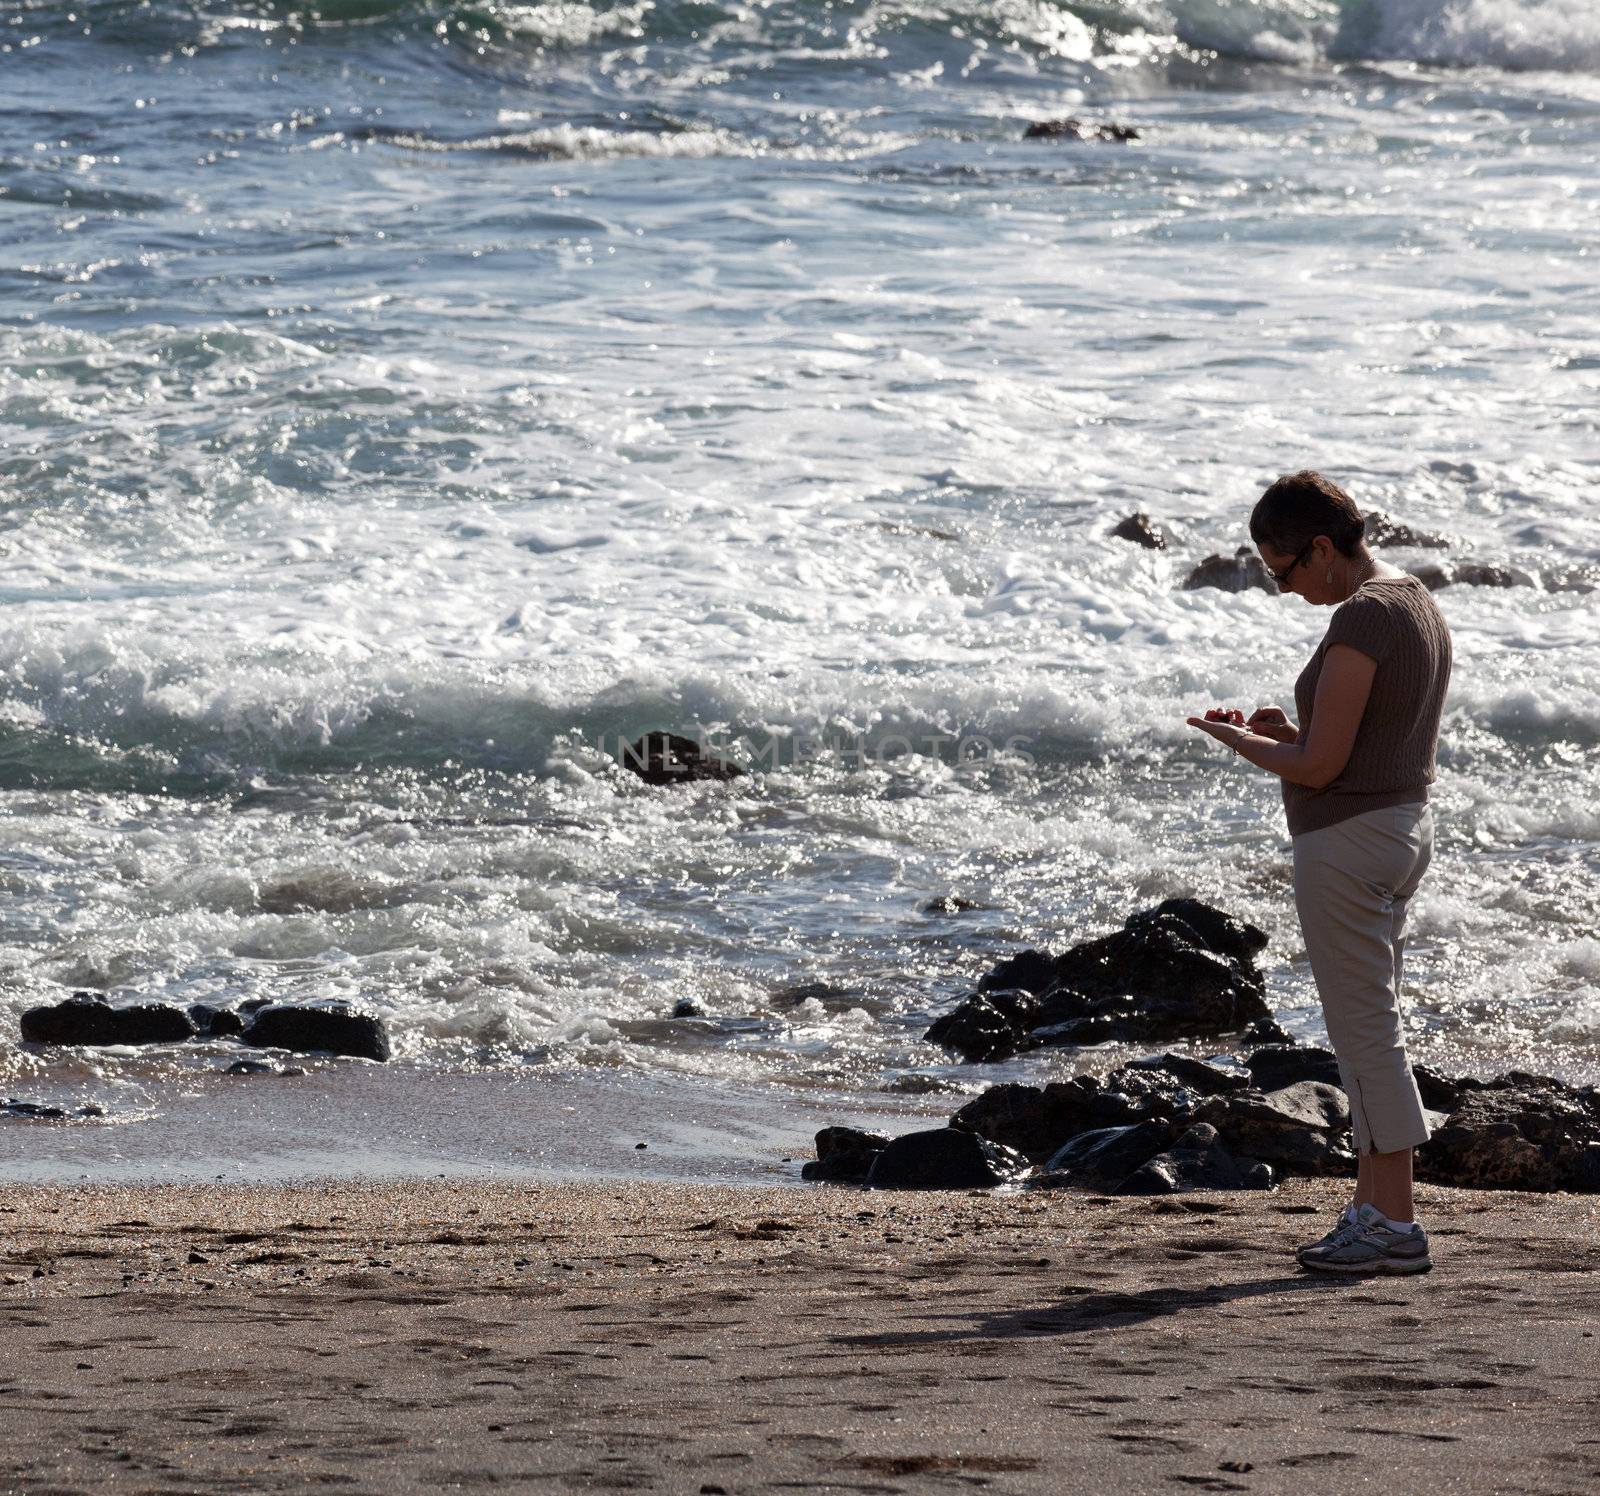 Woman beachcomb on Glass Beach by steheap